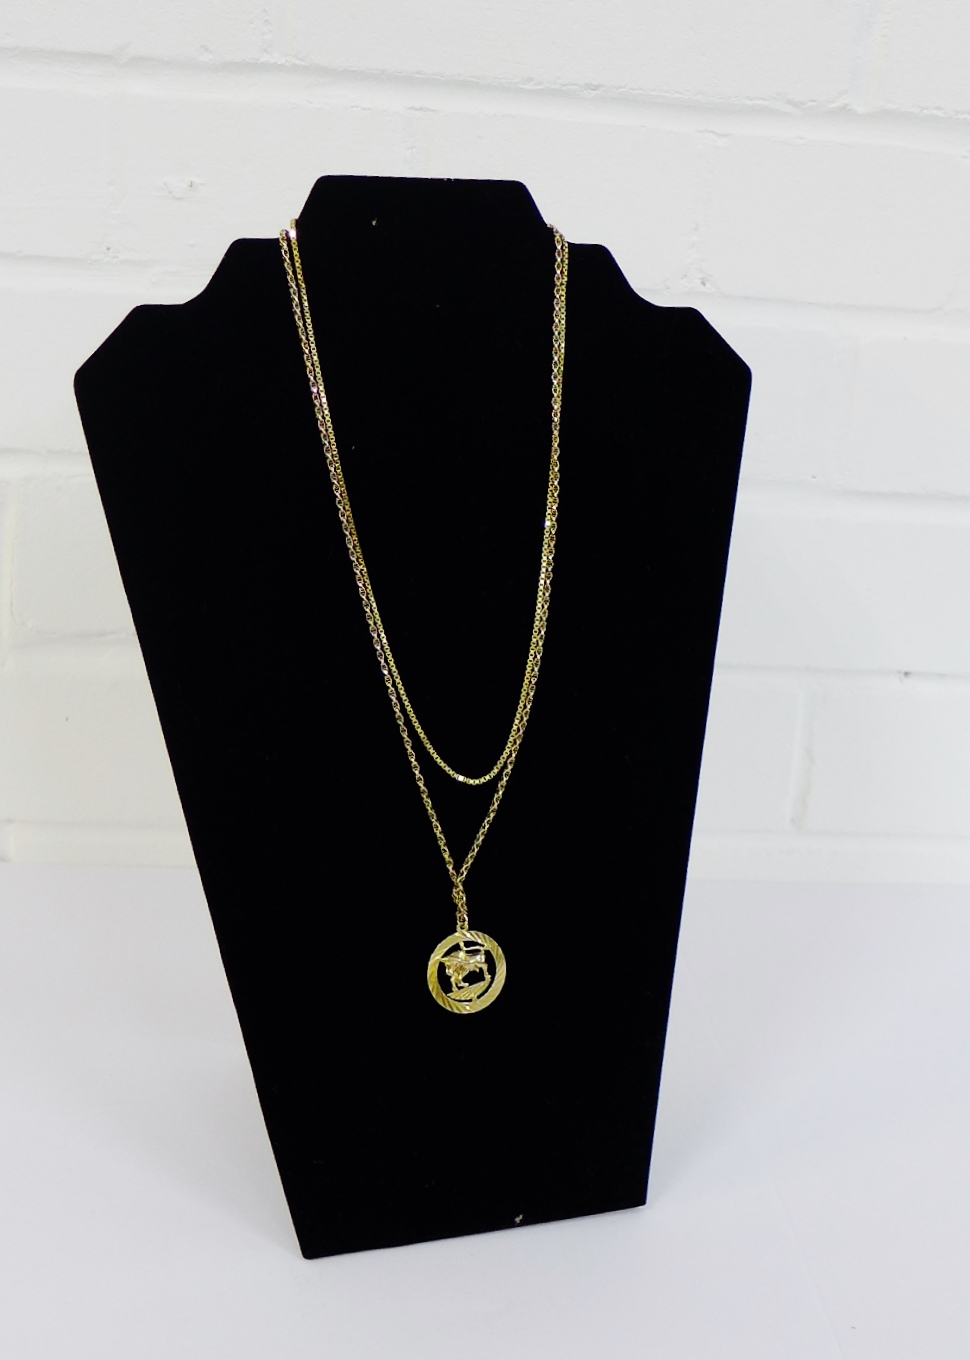 9 carat gold Taurus circular pendant on a 9 carat gold chain together with a 9 carat gold box